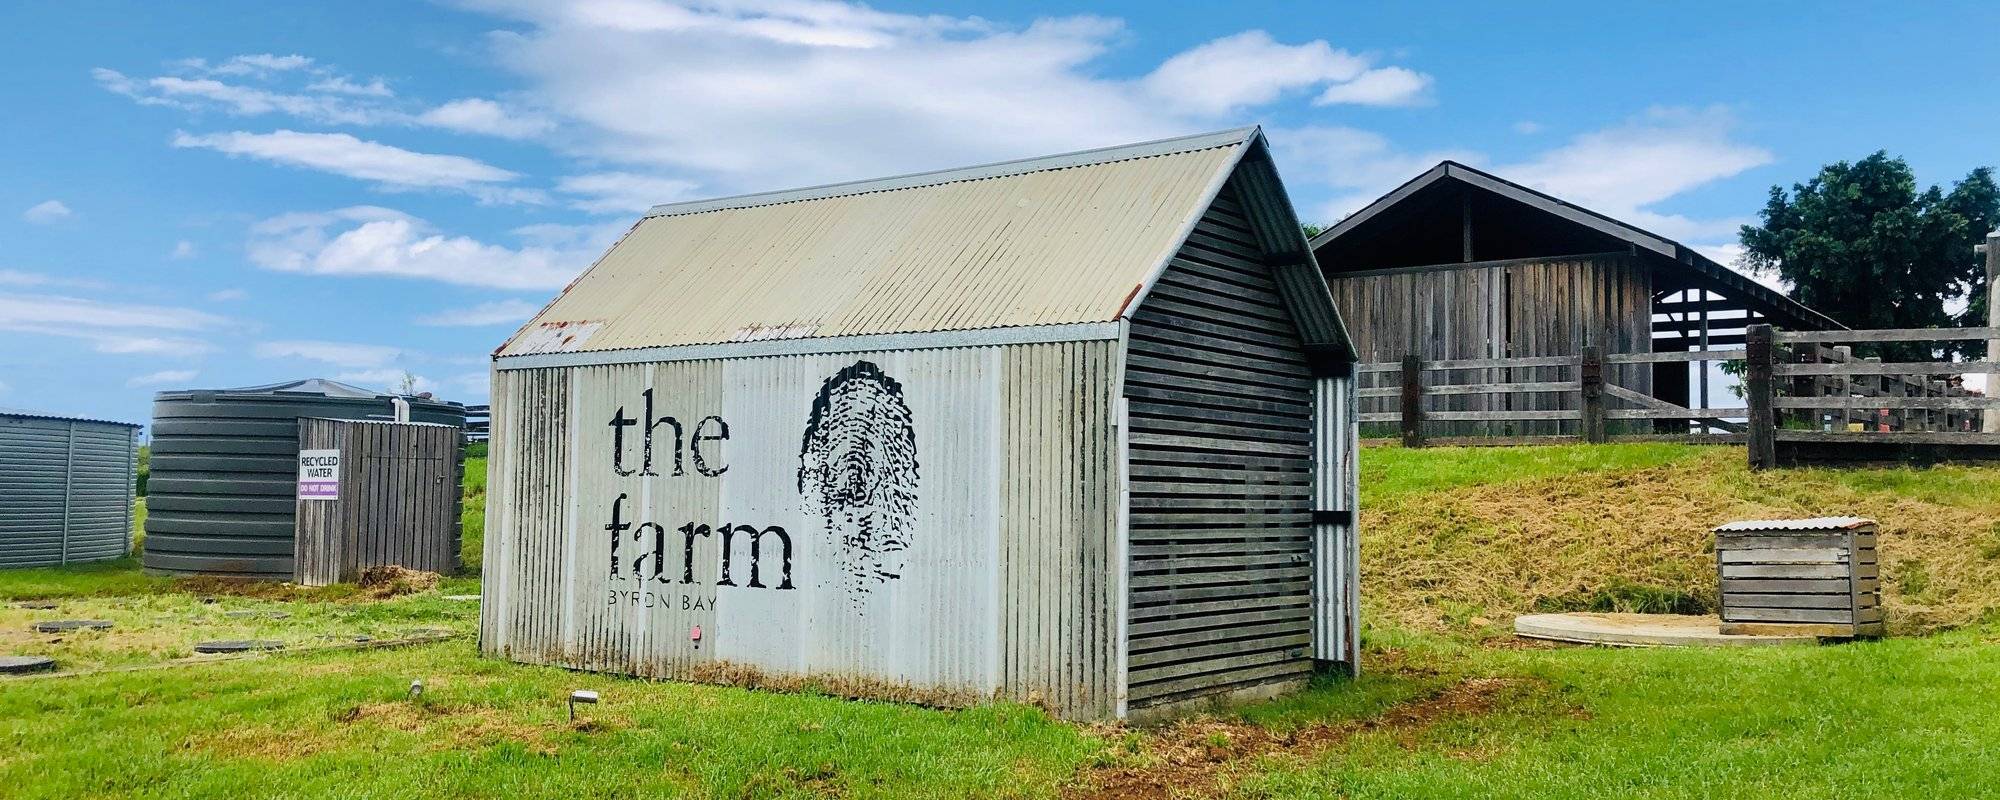 The Farm - Grow, Feed and Educate